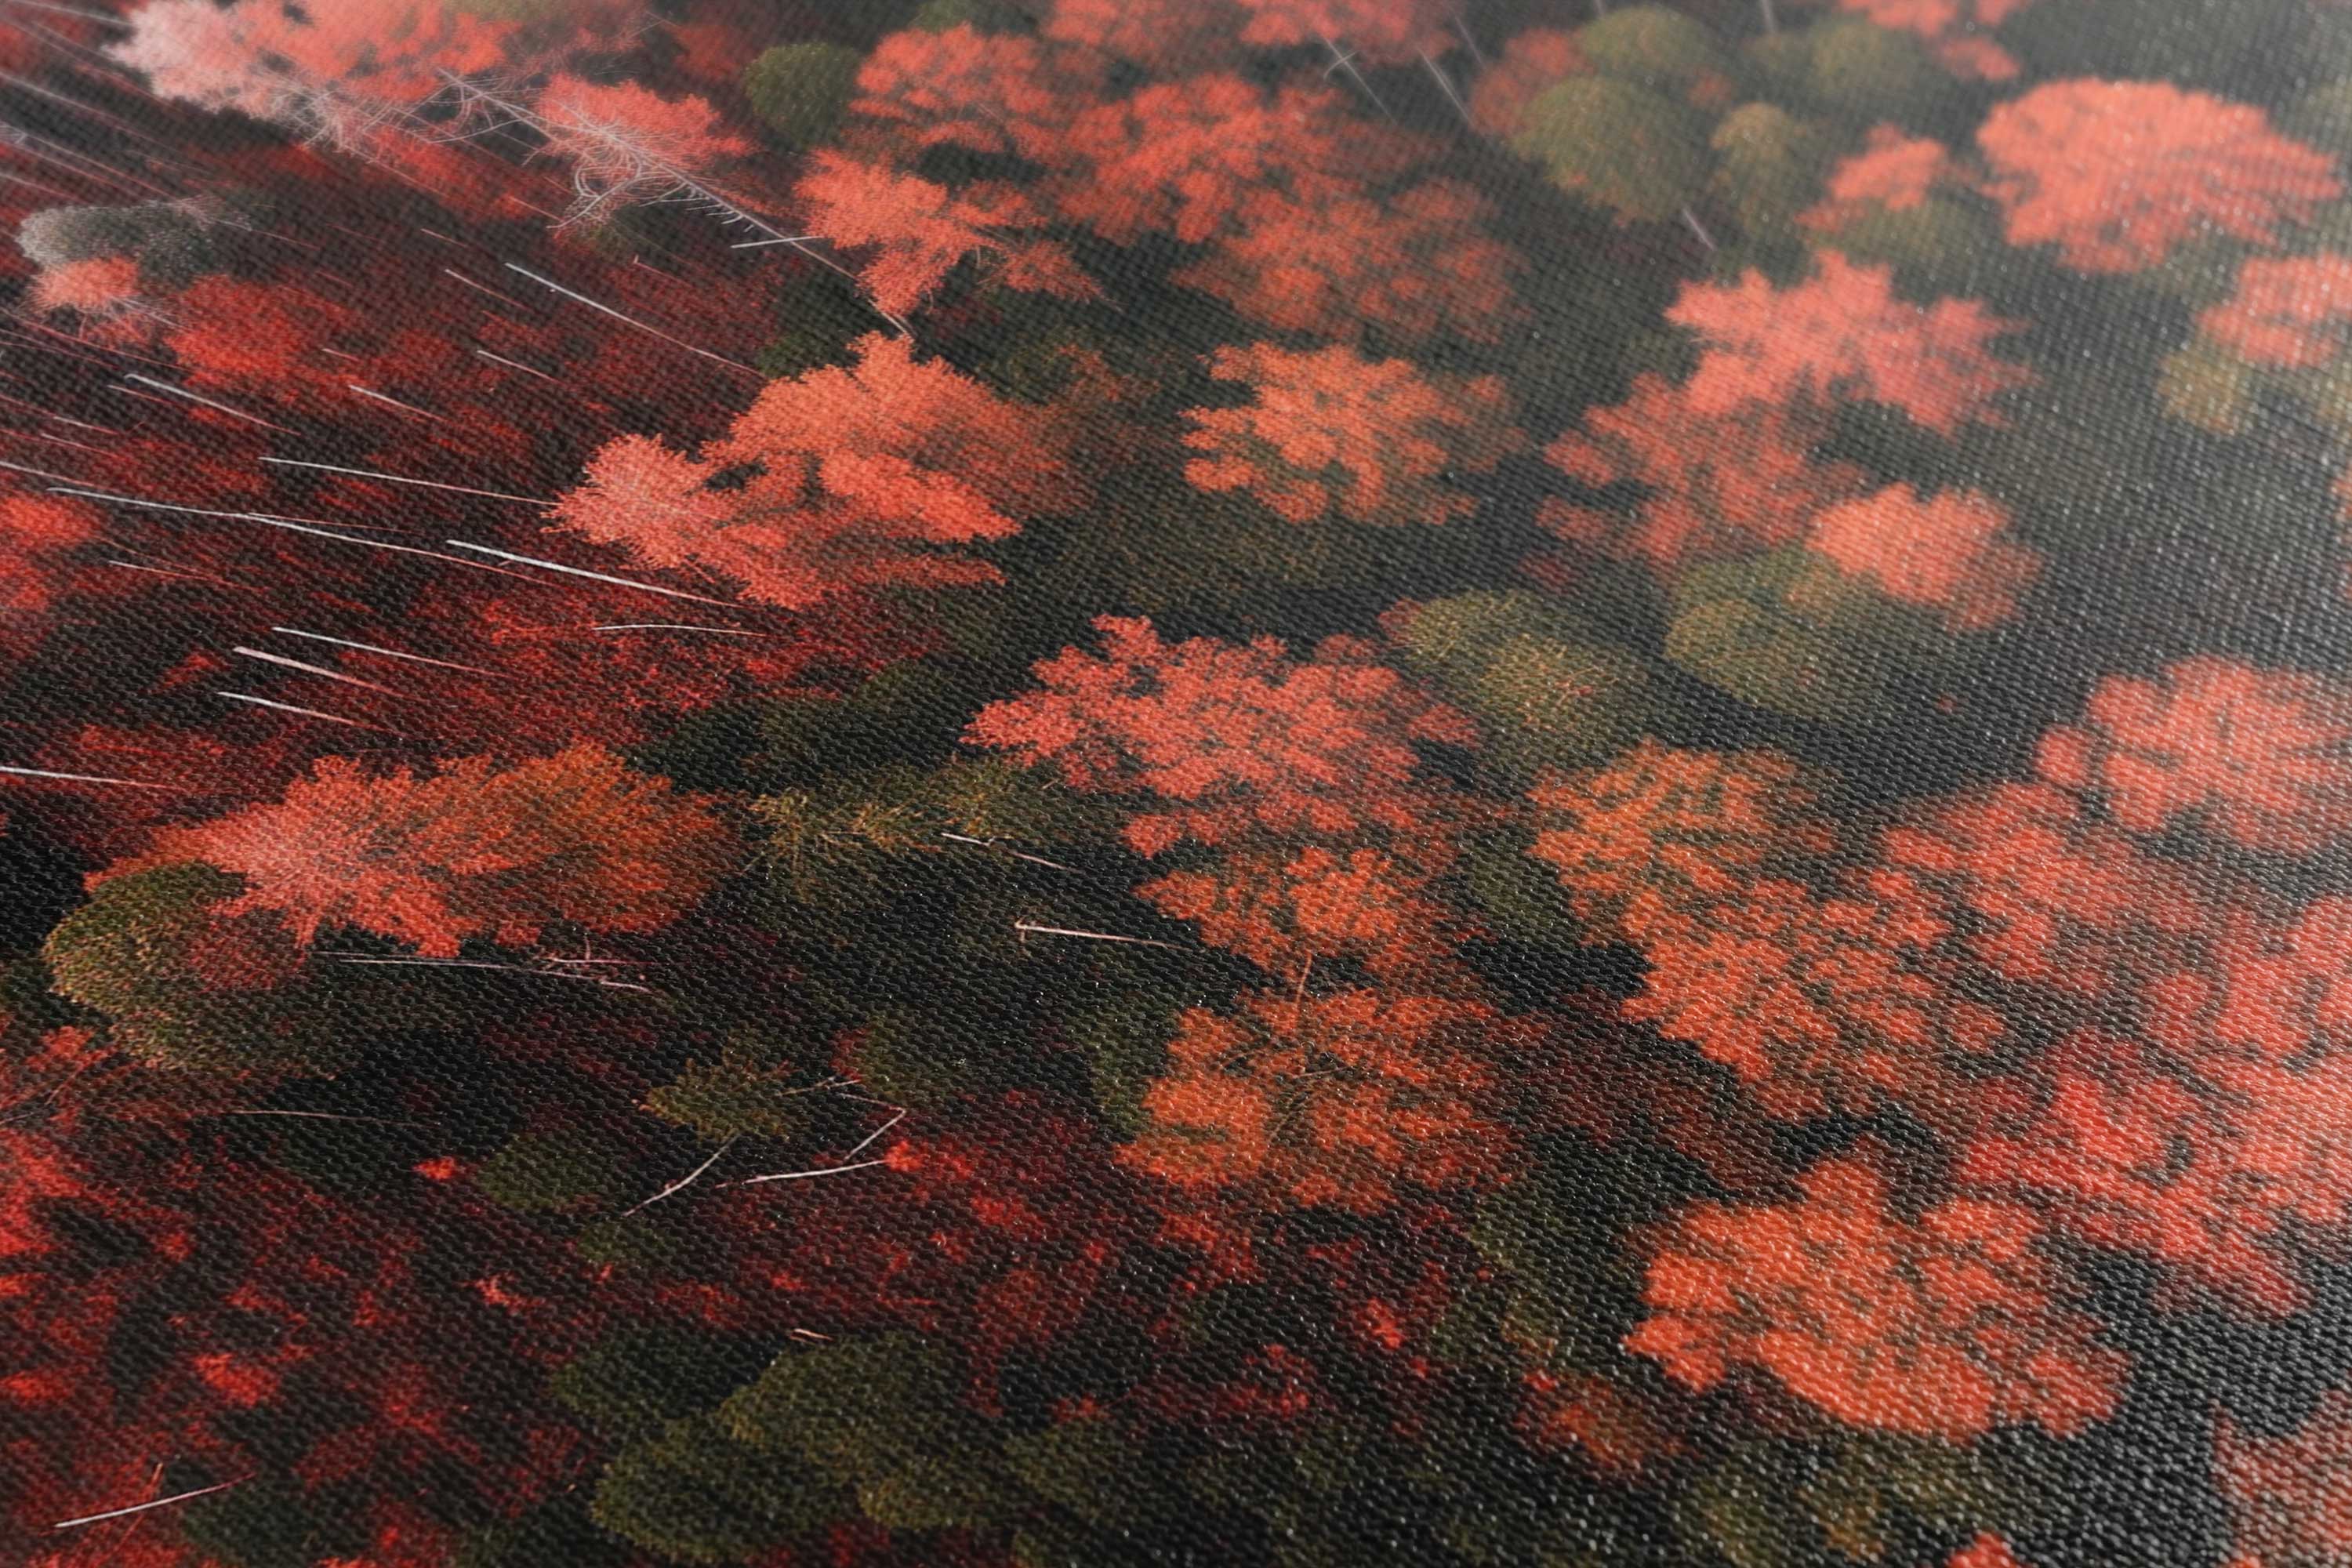  Fiery Autumn Foliage Artwork